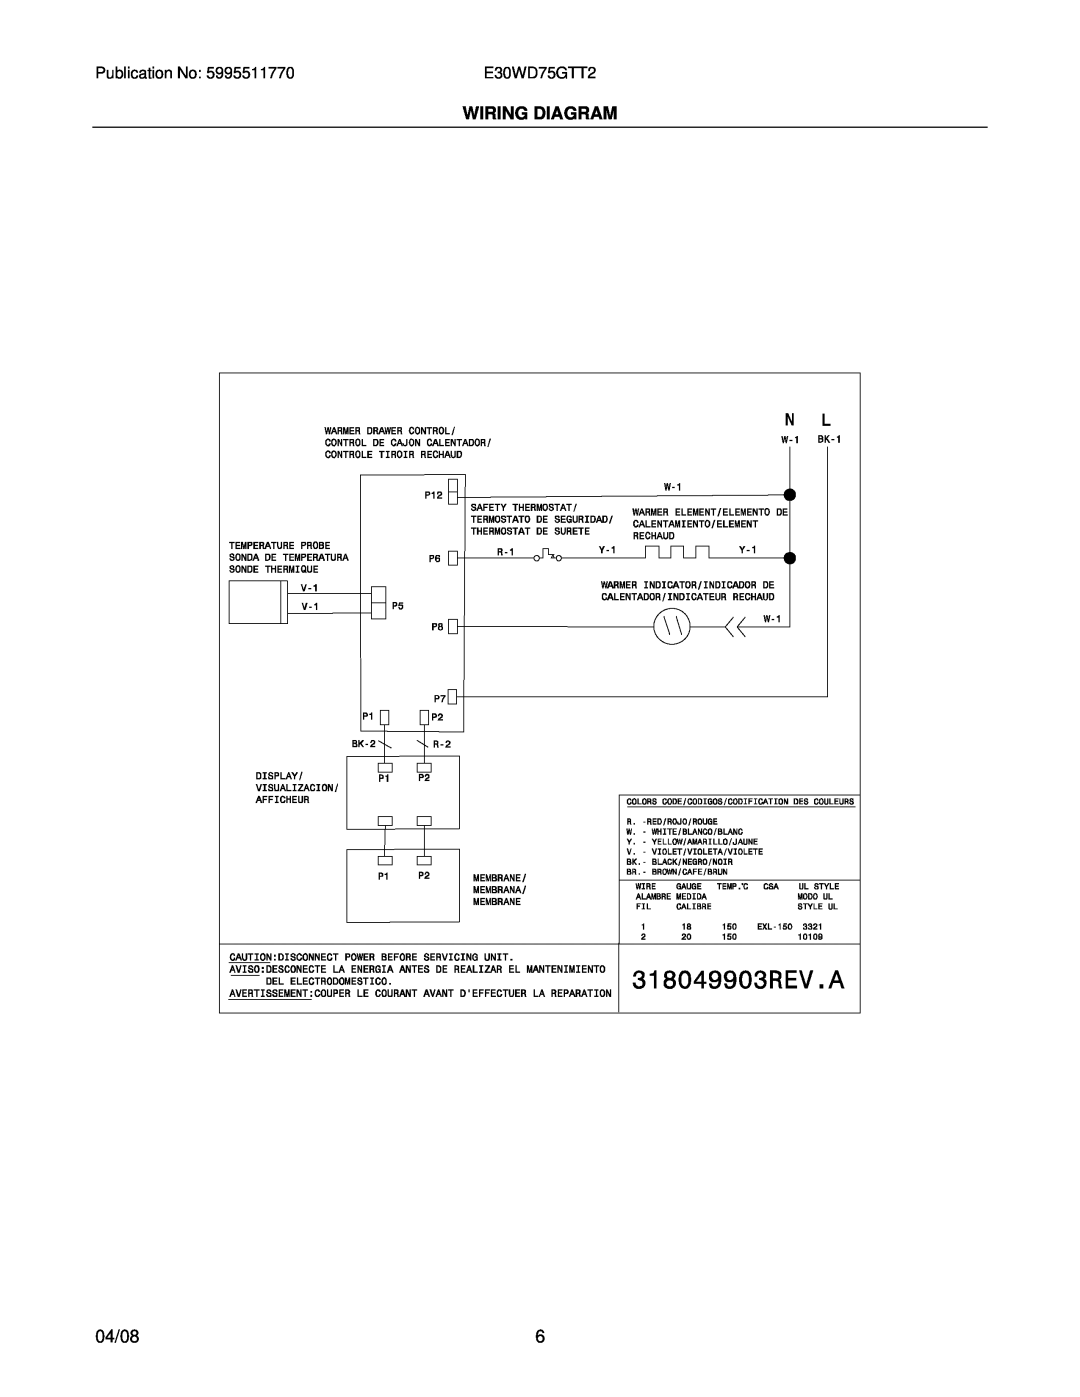 Electrolux 31266300570S2, E30WD75GTT2 installation instructions Wiring Diagram, 04/08 